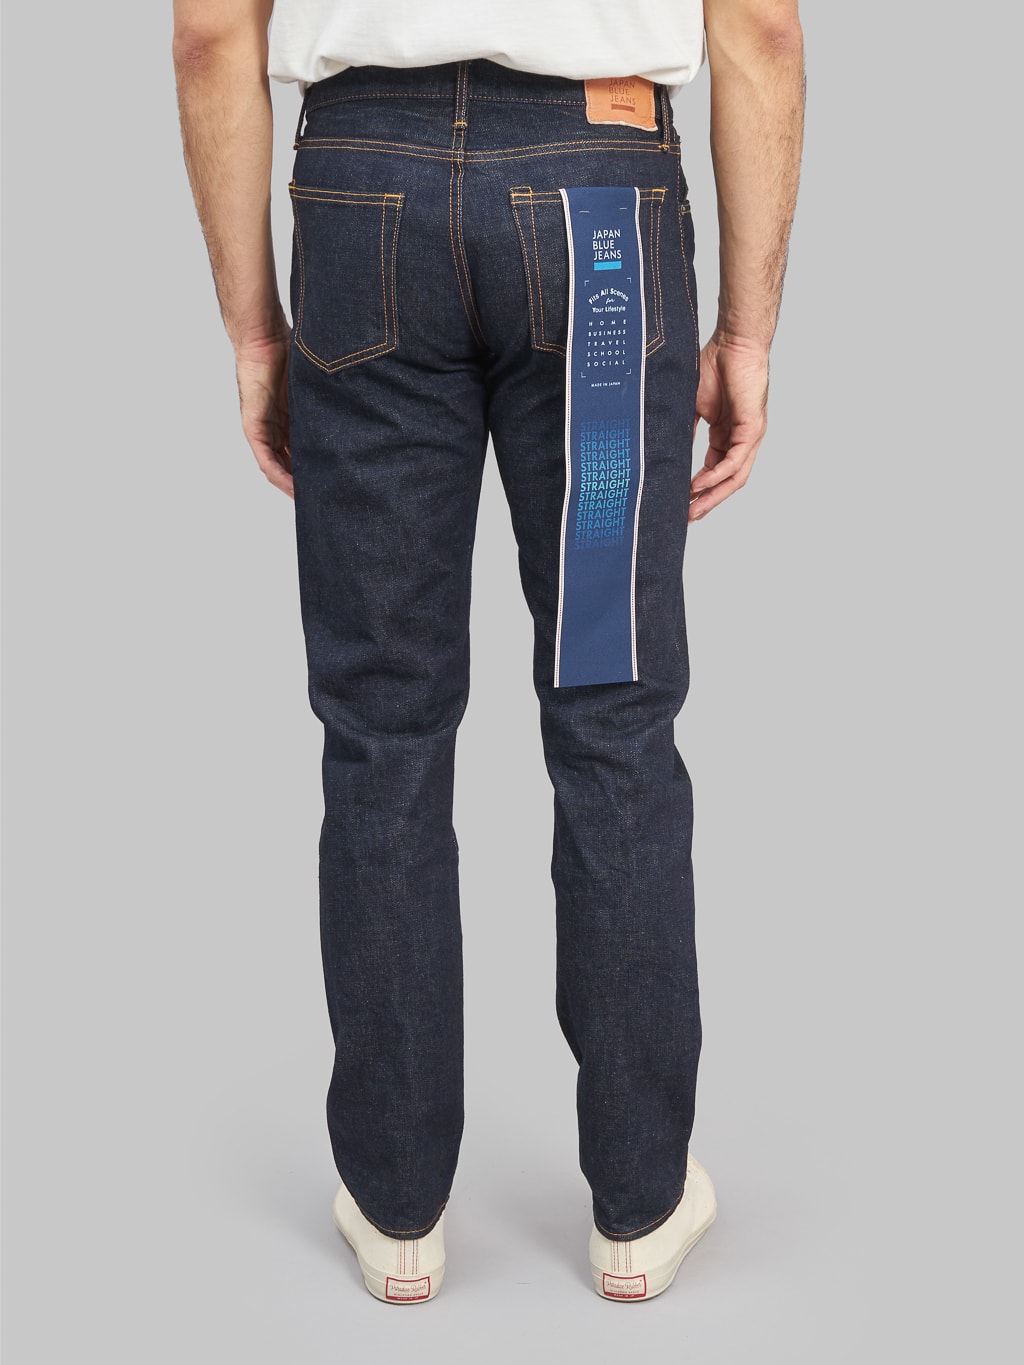 Japan Blue J301 US Cotton Circle Straight Jeans back rise